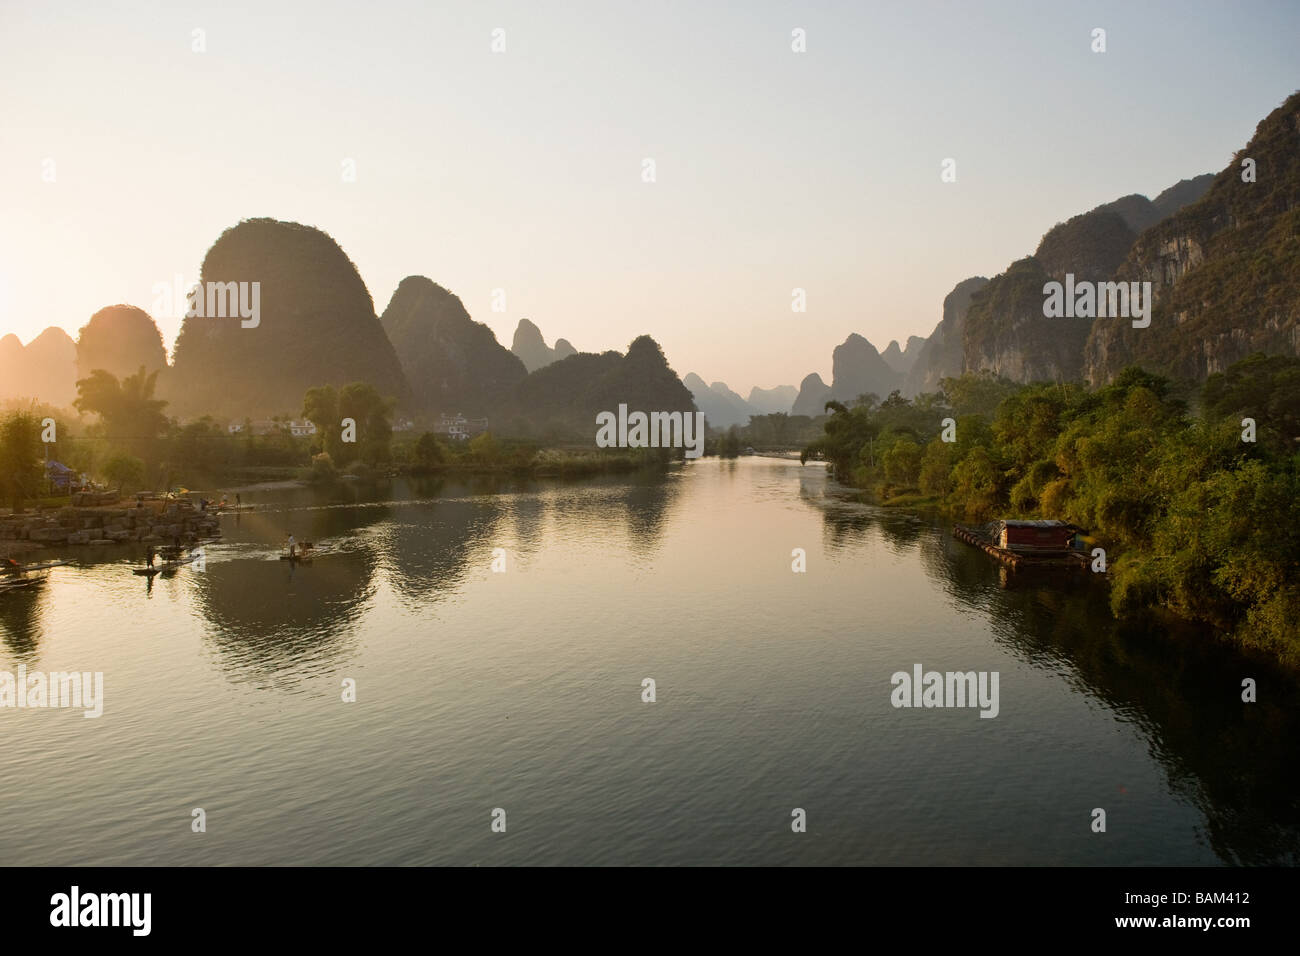 Yulong river and karst landscape Stock Photo